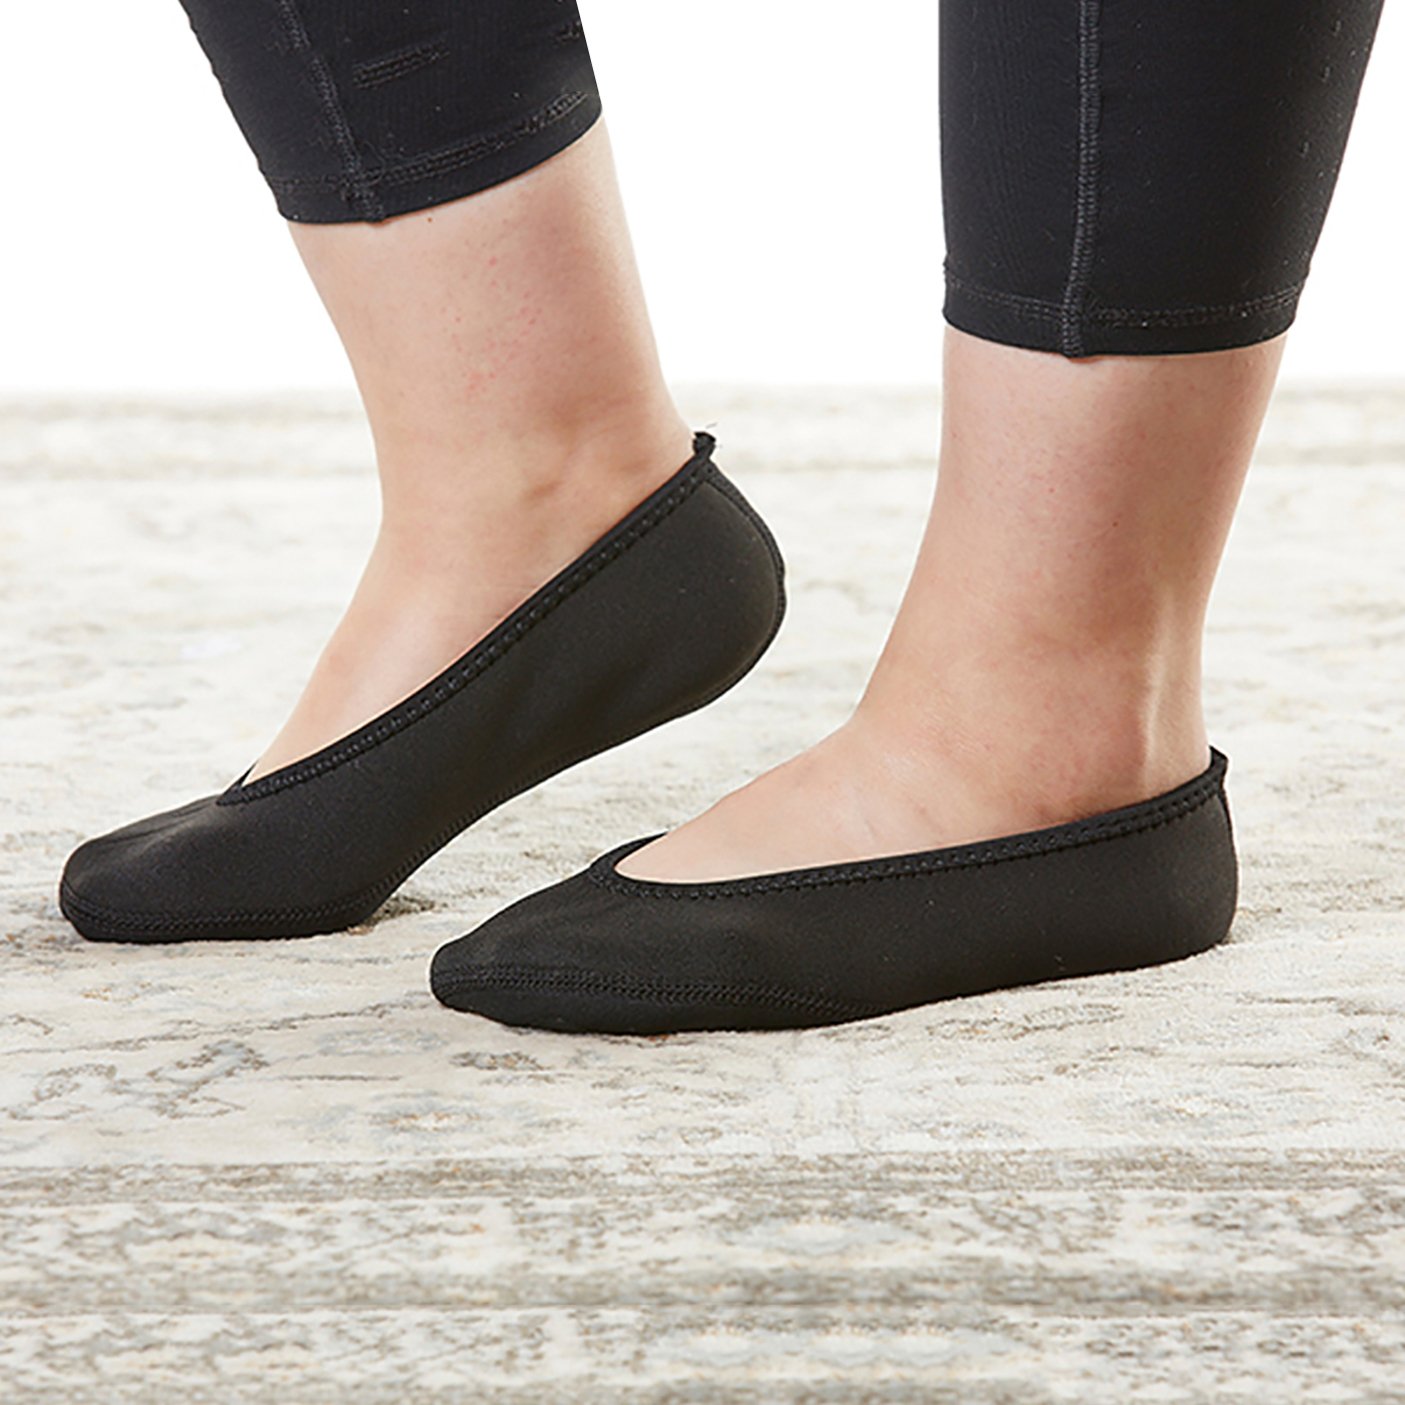 NuFoot Ballet Flats Women's Shoes, Best Foldable & Flexible Flats, Slipper Socks, Travel Slippers & Exercise Shoes, Dance Shoes, Yoga Socks, House Shoes, Indoor Slippers, Pink